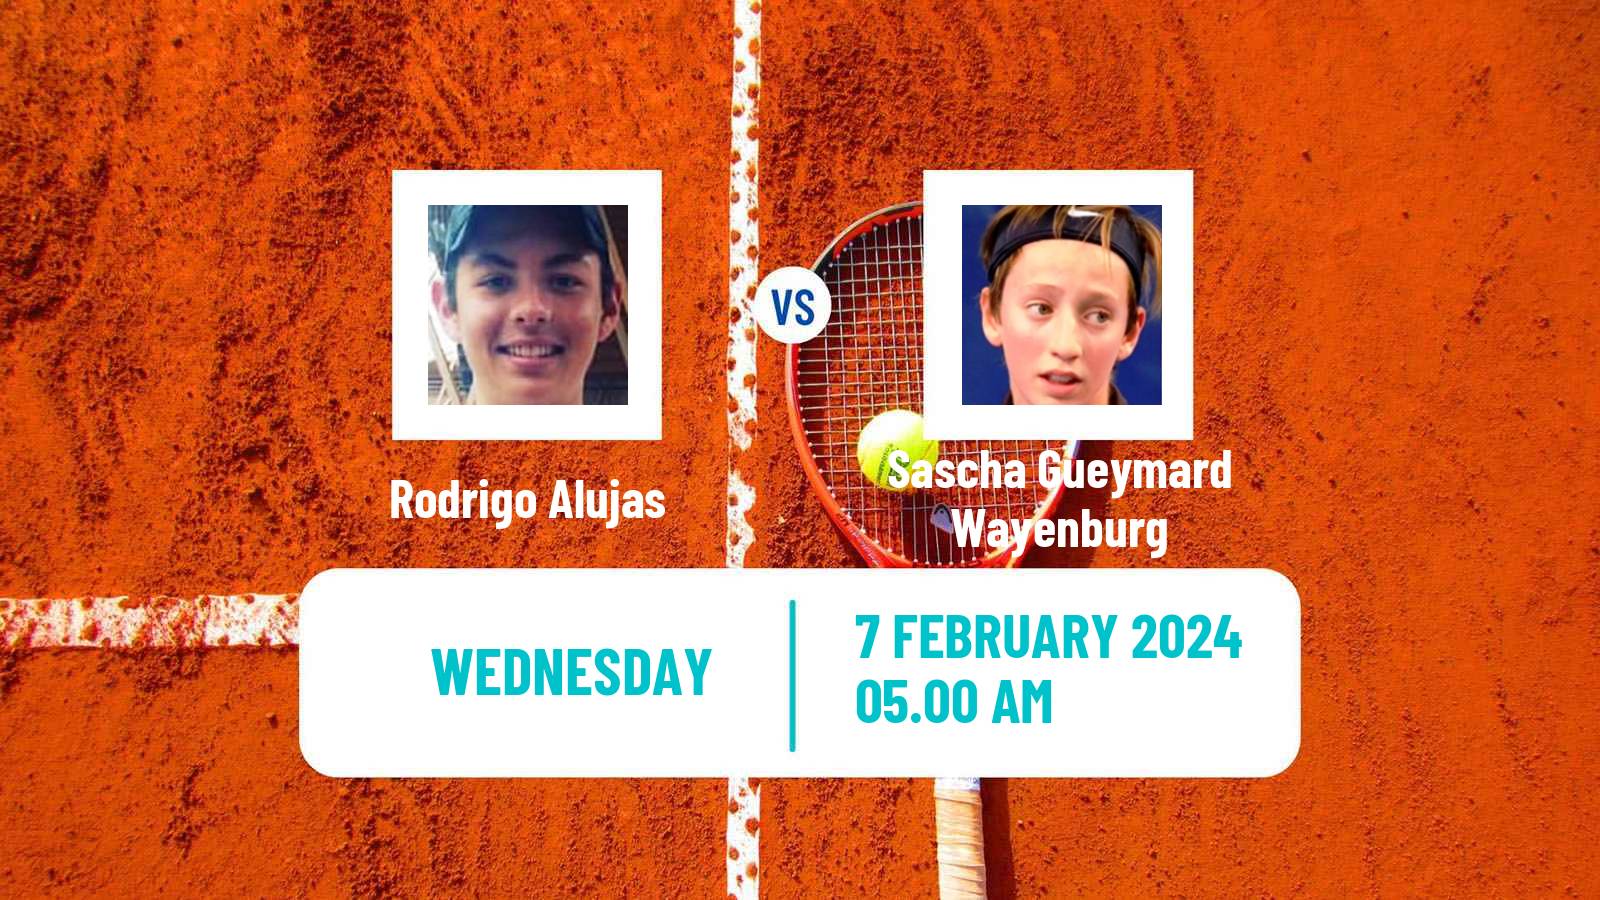 Tennis ITF M15 Grenoble Men Rodrigo Alujas - Sascha Gueymard Wayenburg